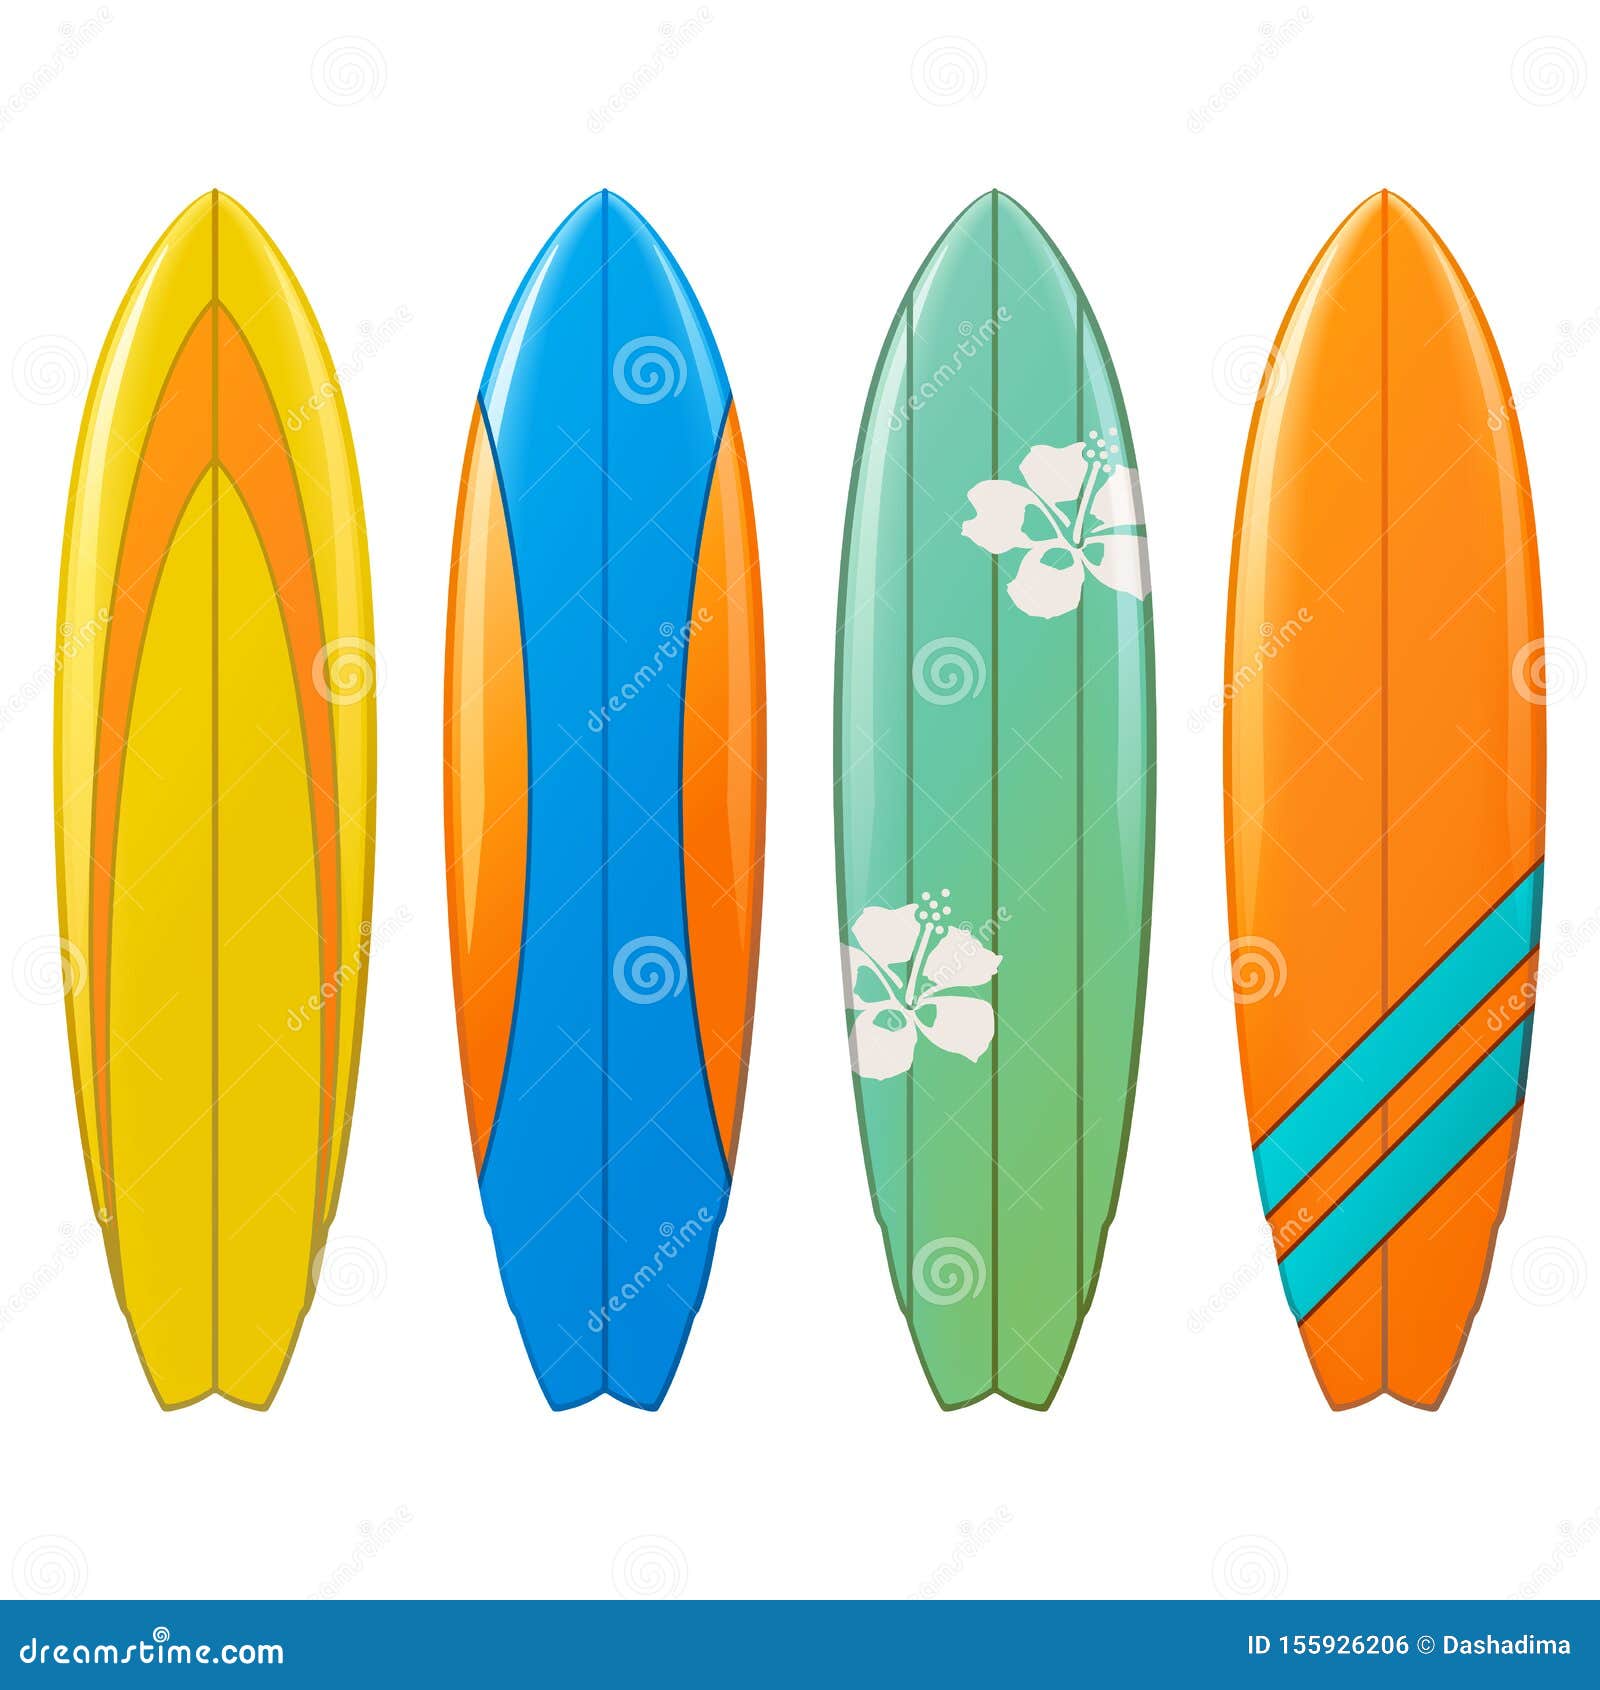 Surfboard Images Free Download On Freepik | tyello.com